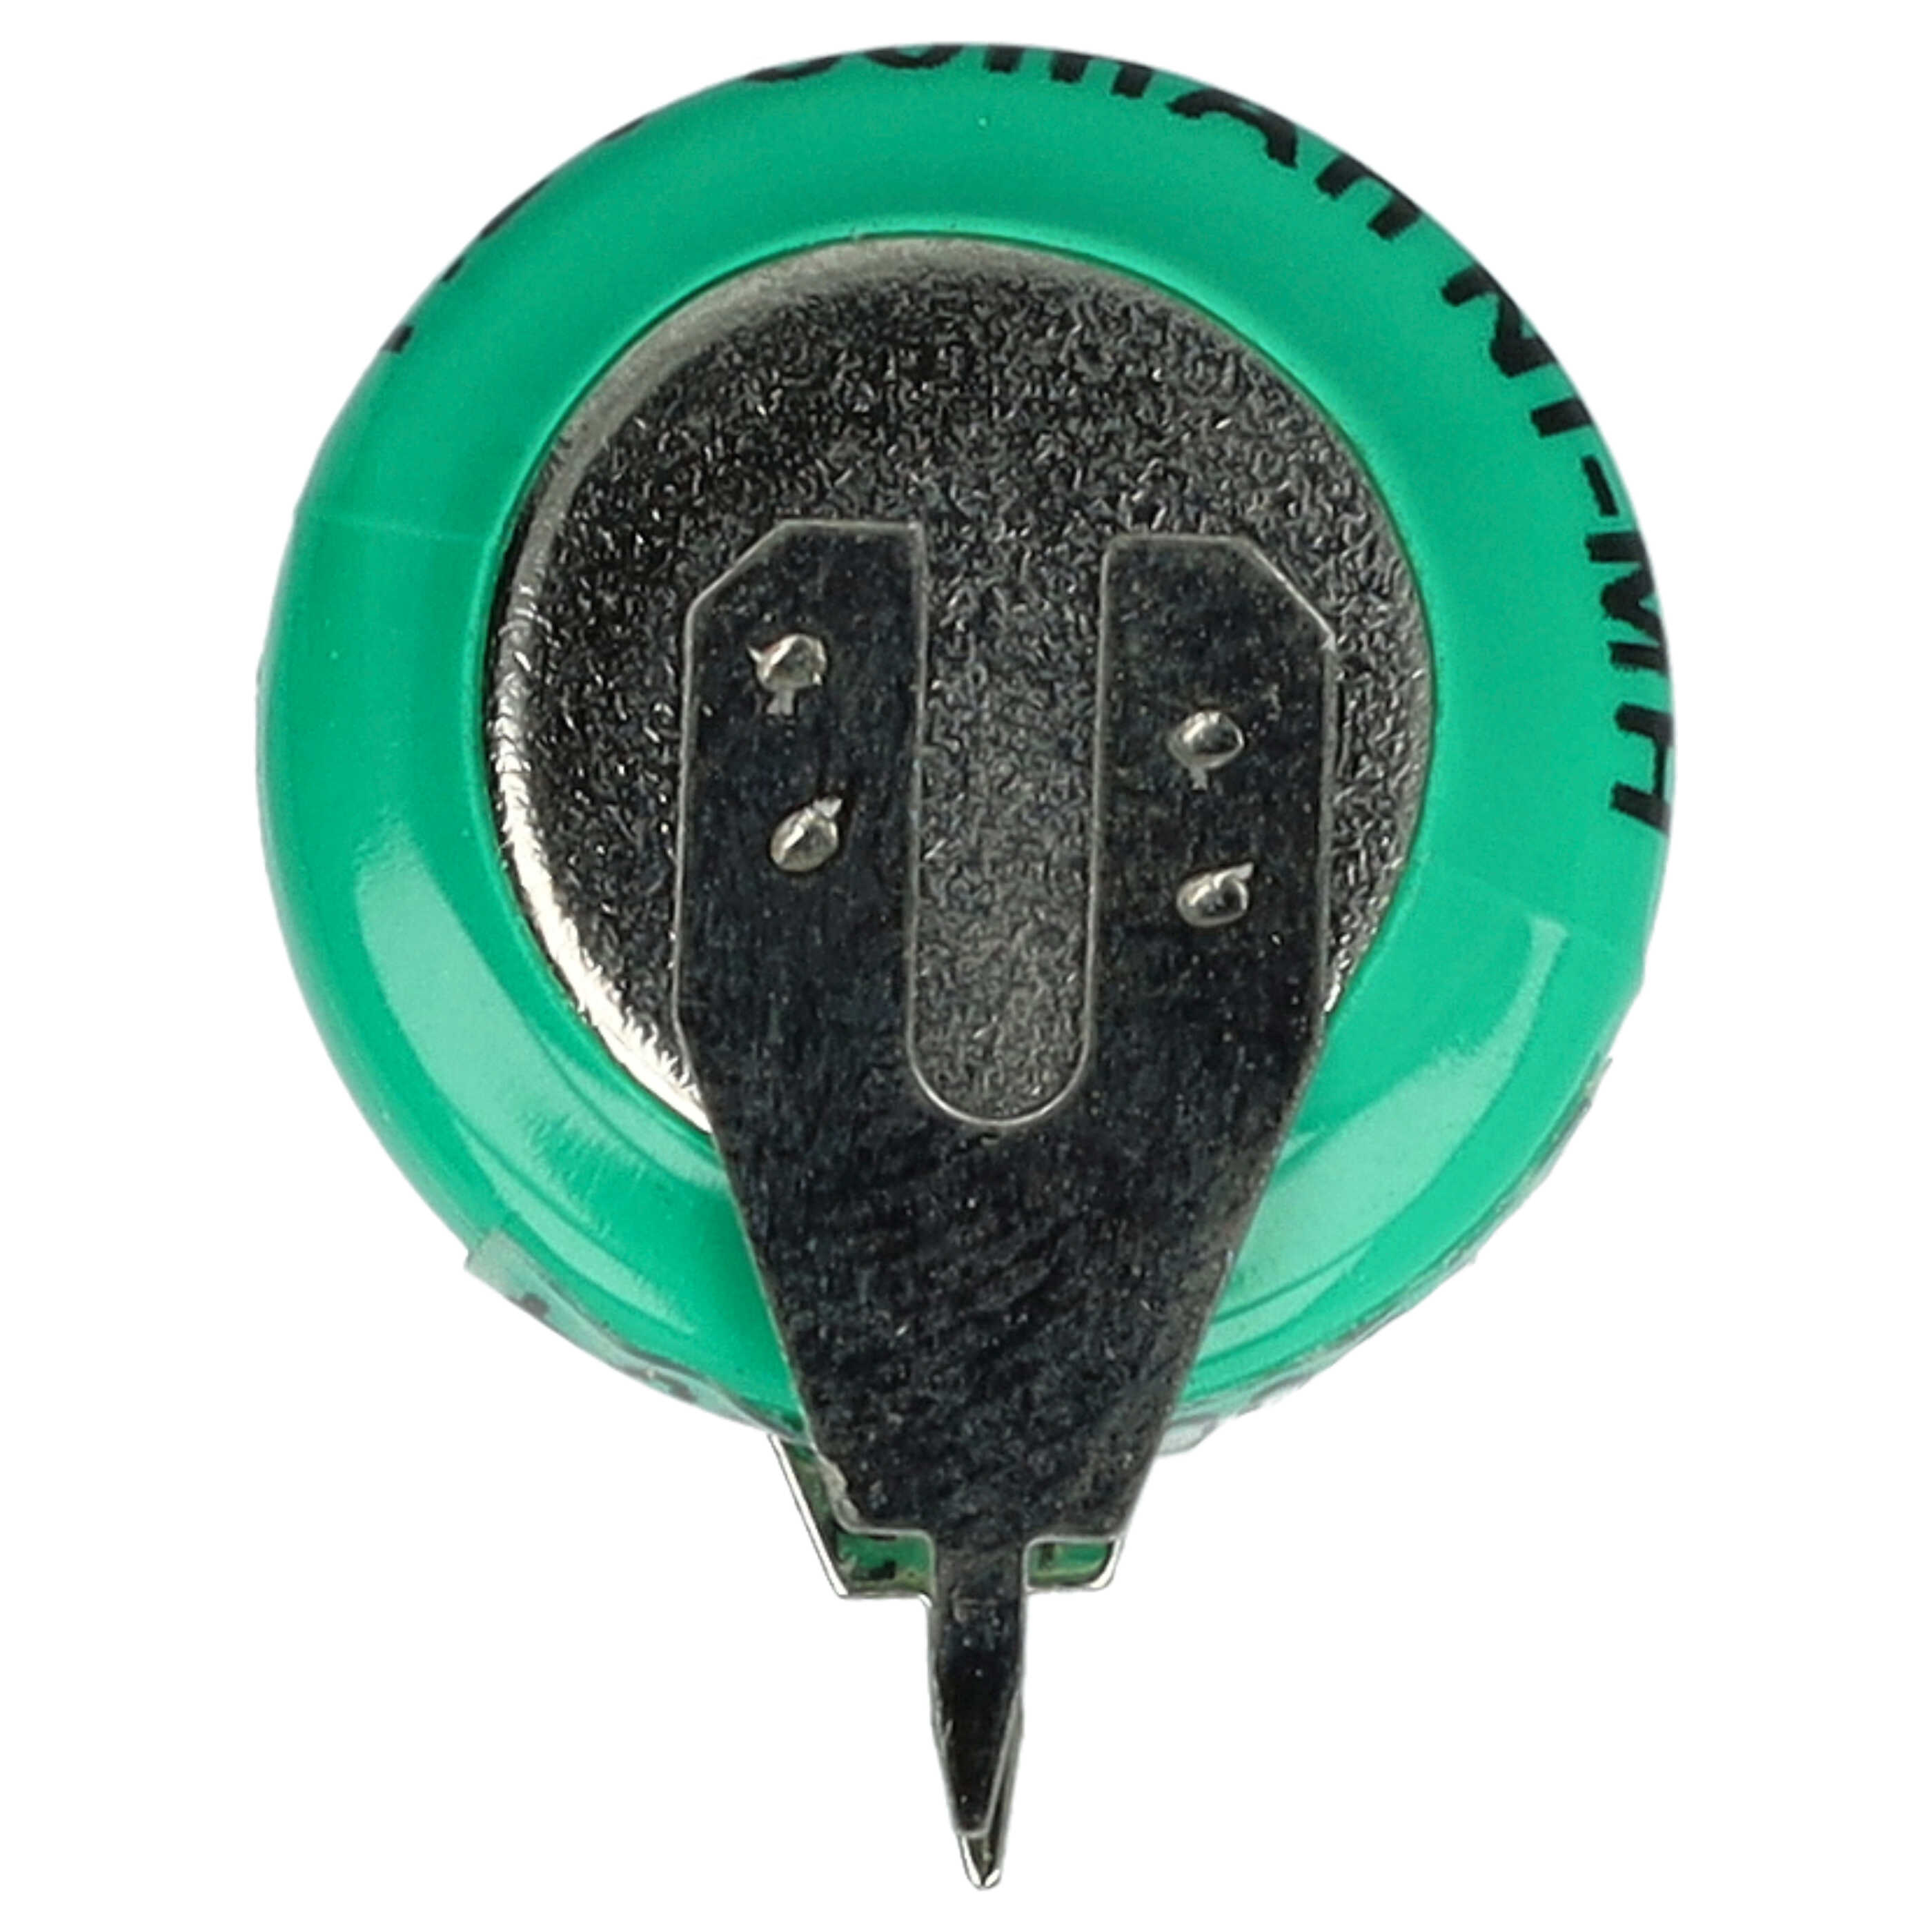 Akumulator guzikowy (1x ogniwo) typ 2 pin do modeli, lamp solarnych itp. zamiennik - 80 mAh 1,2 V NiMH